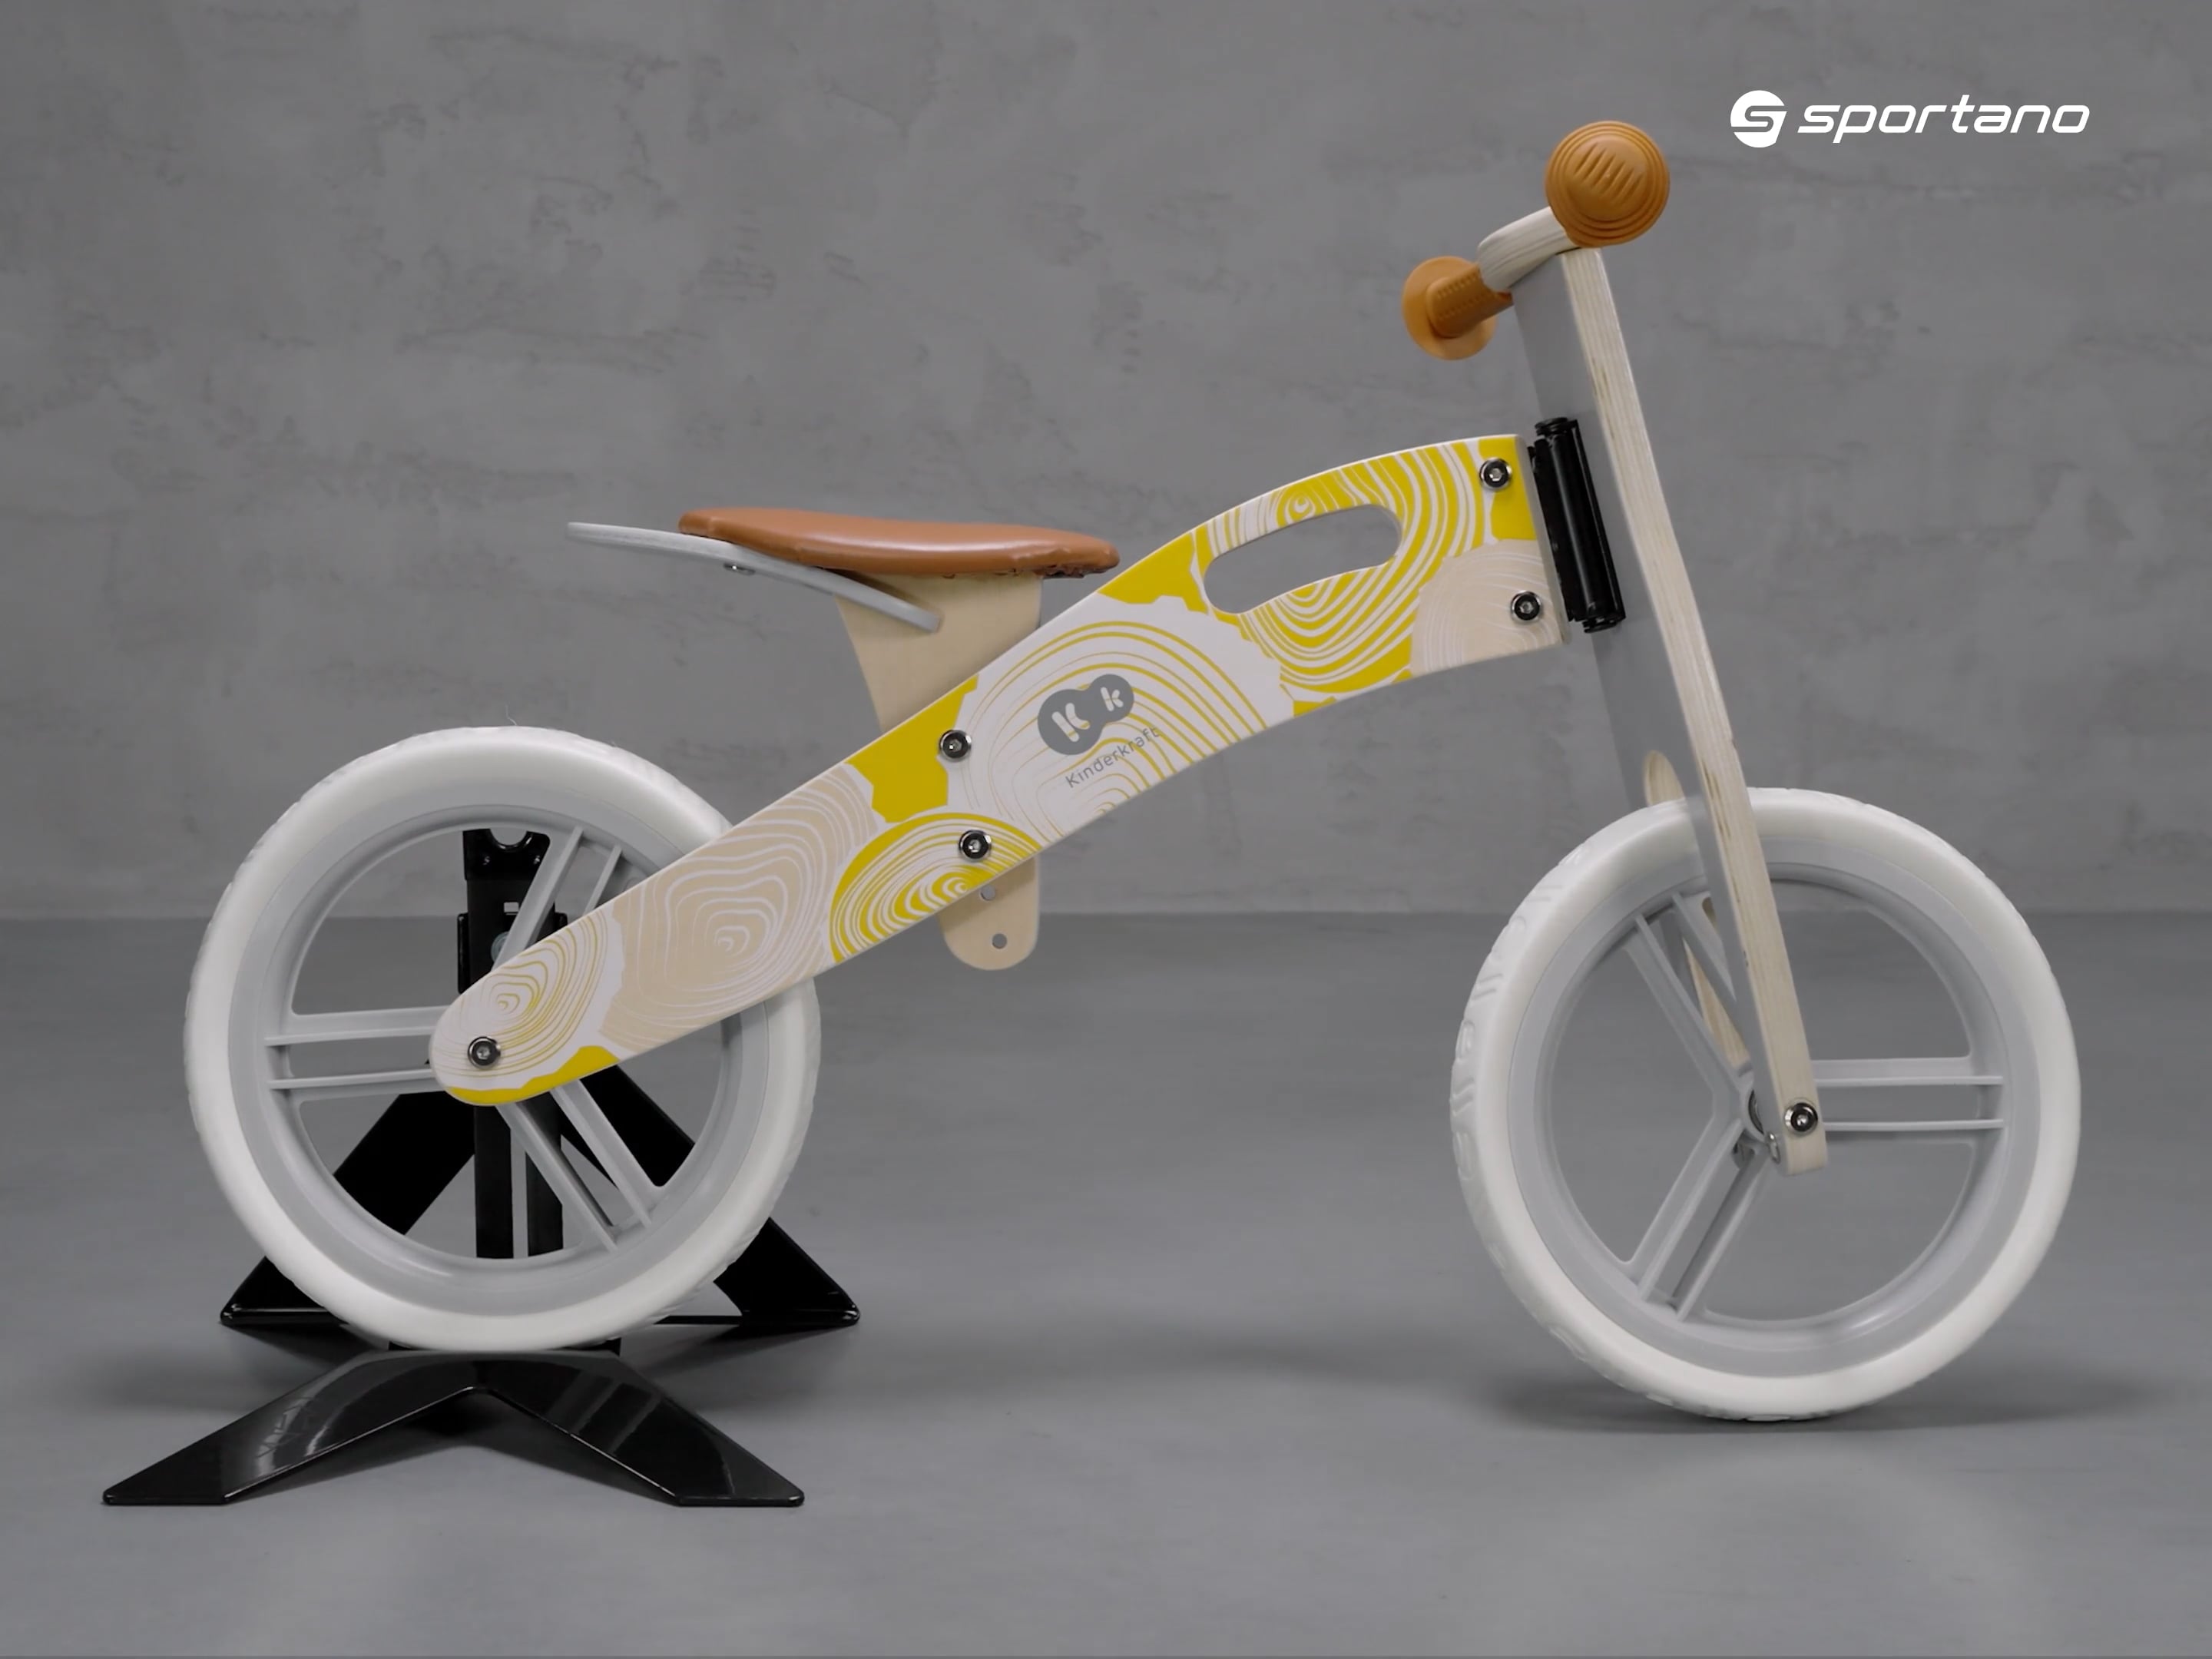 Kinderkraft велосипед за бягане жълт KRRUNN00YEL0000